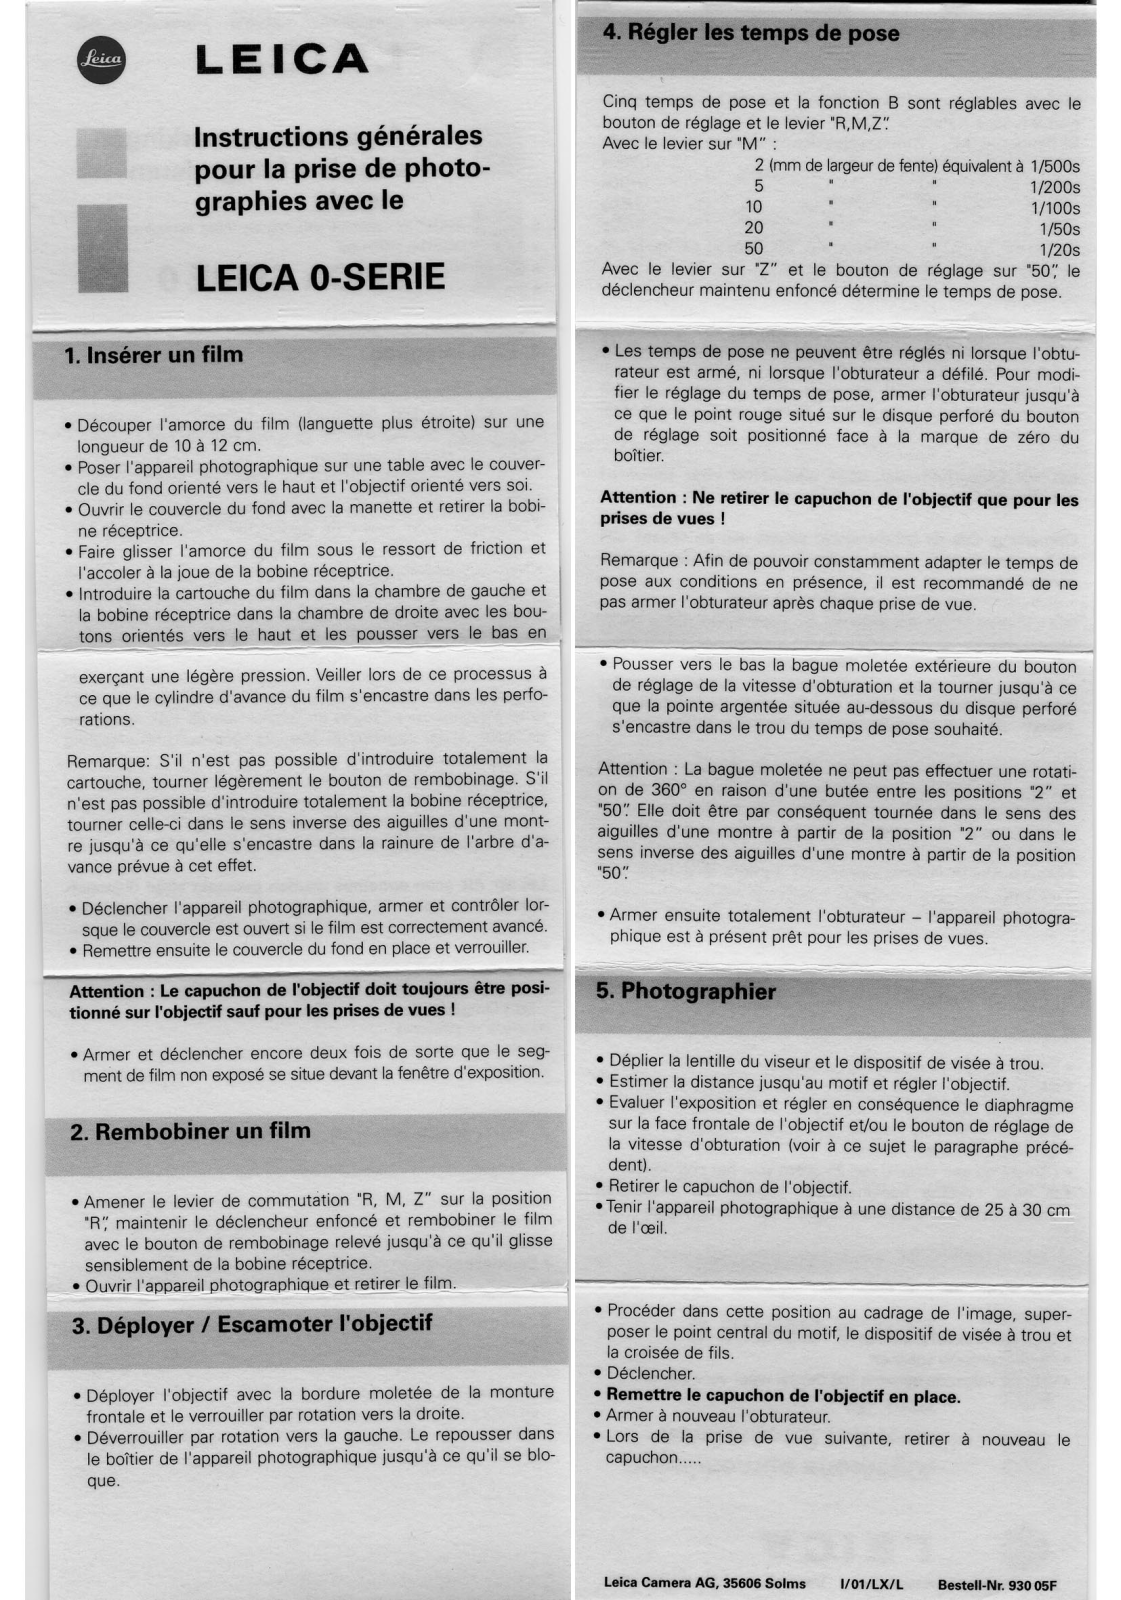 LEICA SERIE 0 User Manual